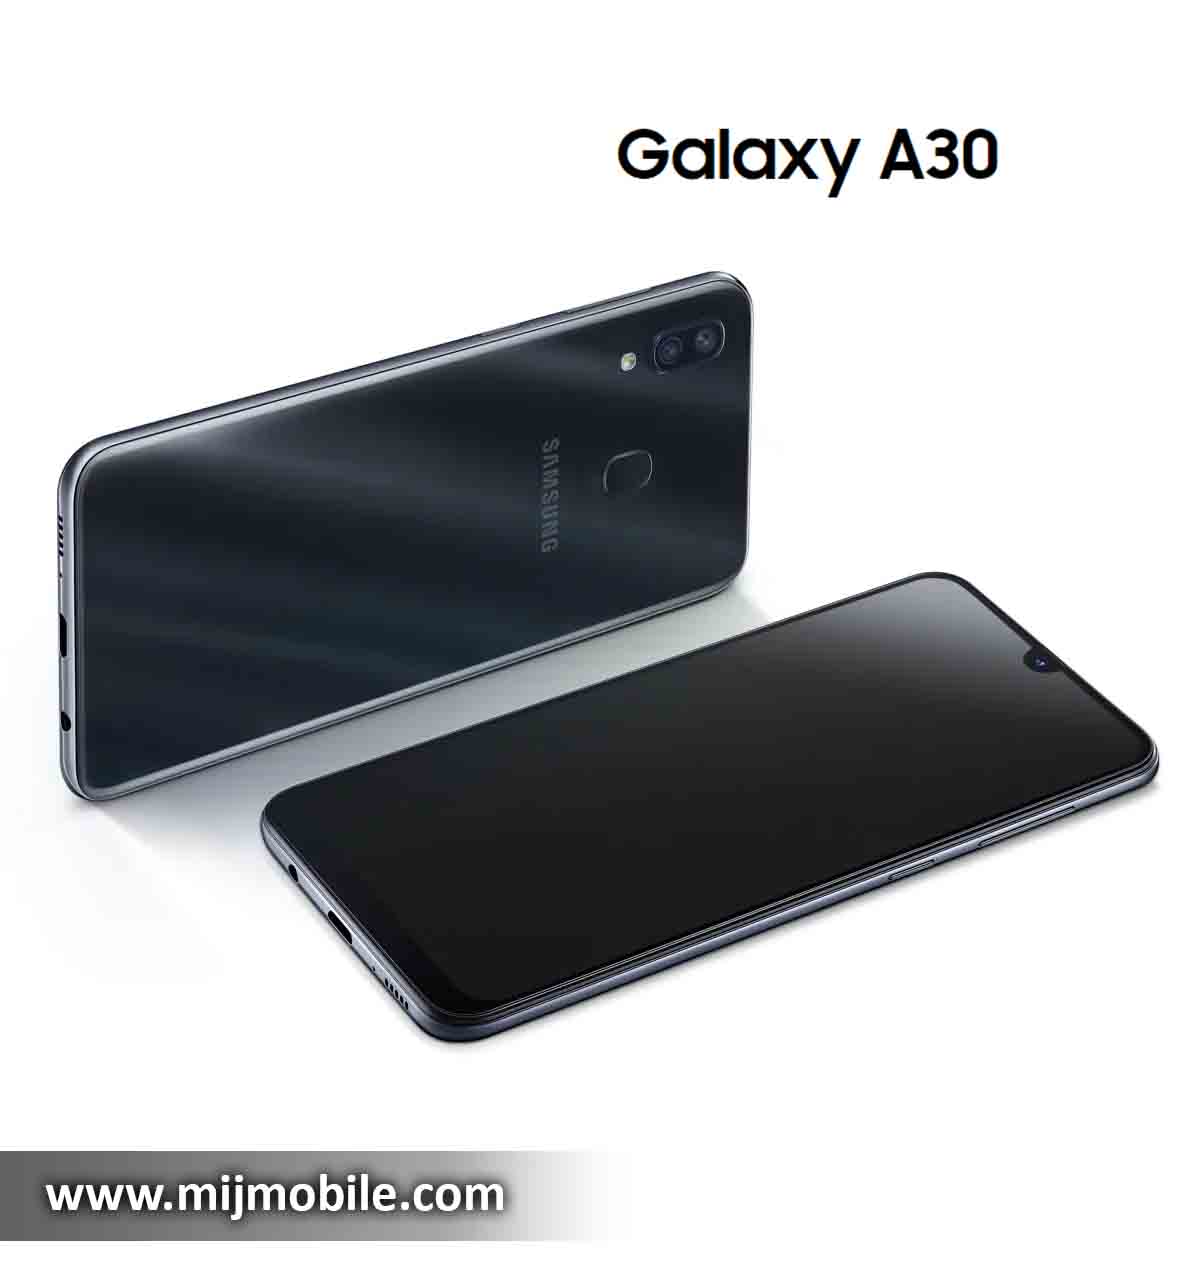 Samsung Galaxy A30 Price in Pakistan & Specifications Samsung Galaxy A30 Price in Pakistan is 37,999.